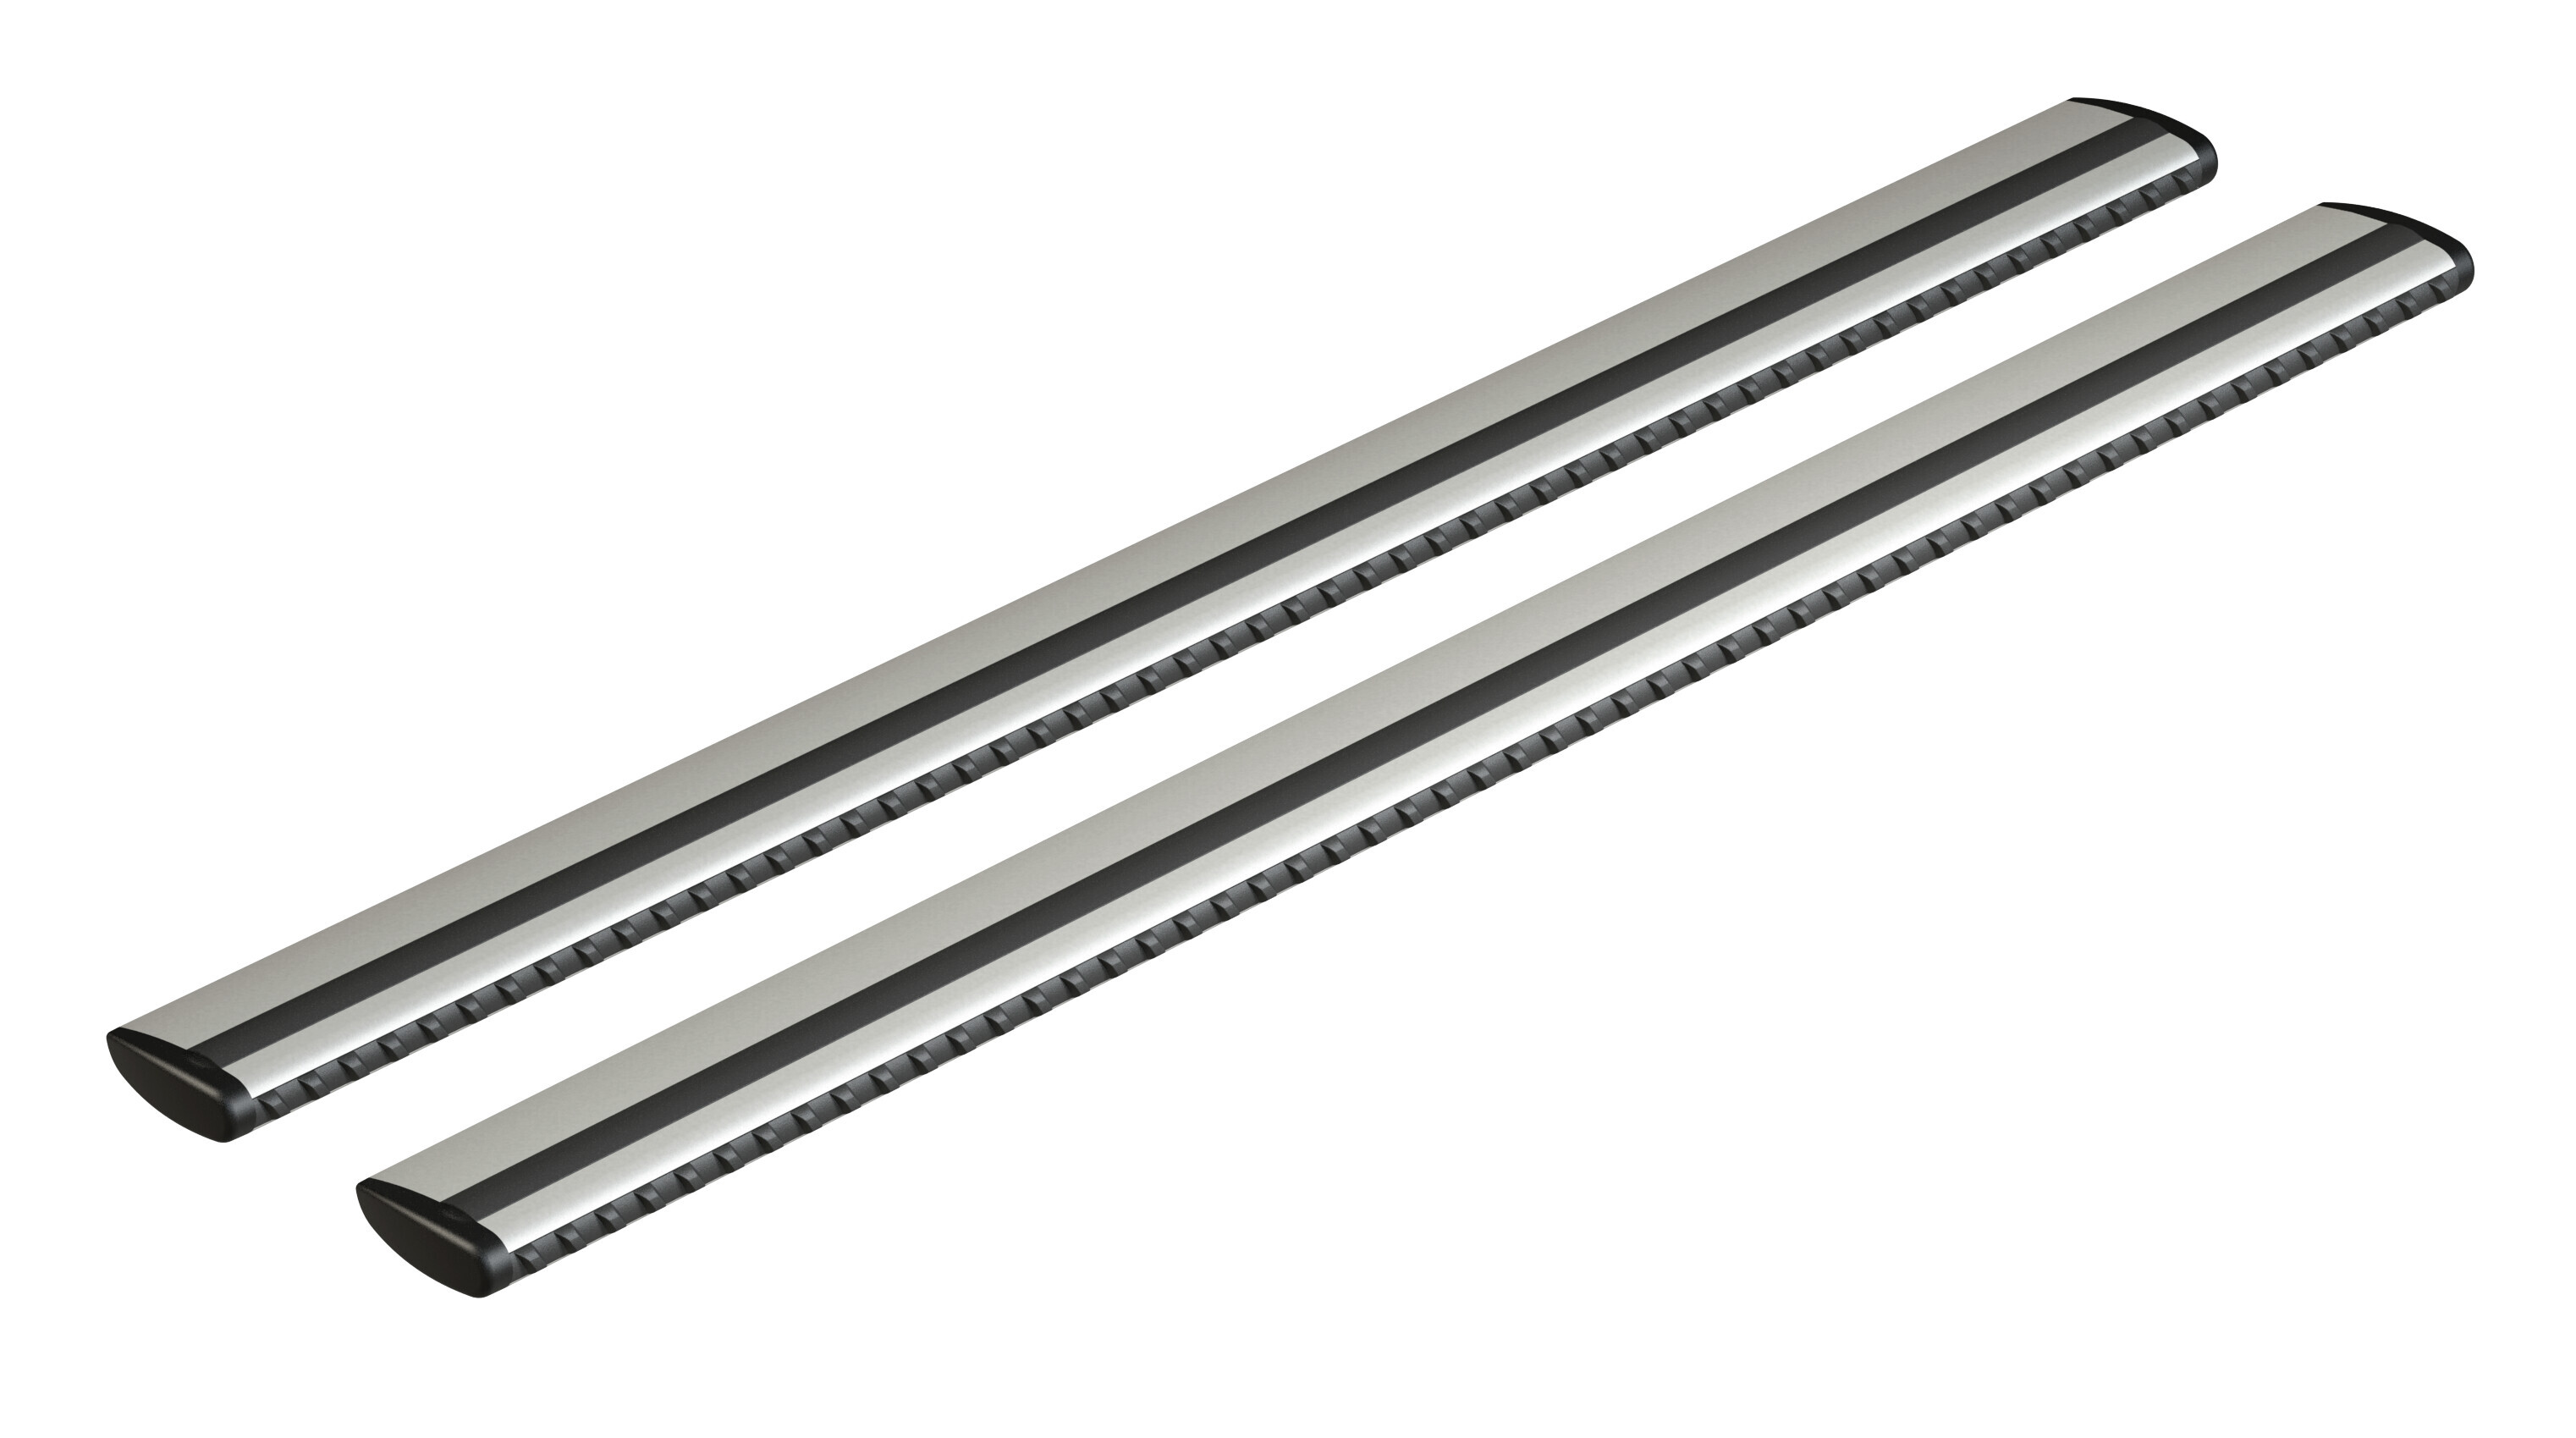 Silenzio aluminium csomagtartórúd szett, 2 db - M - 120 cm thumb